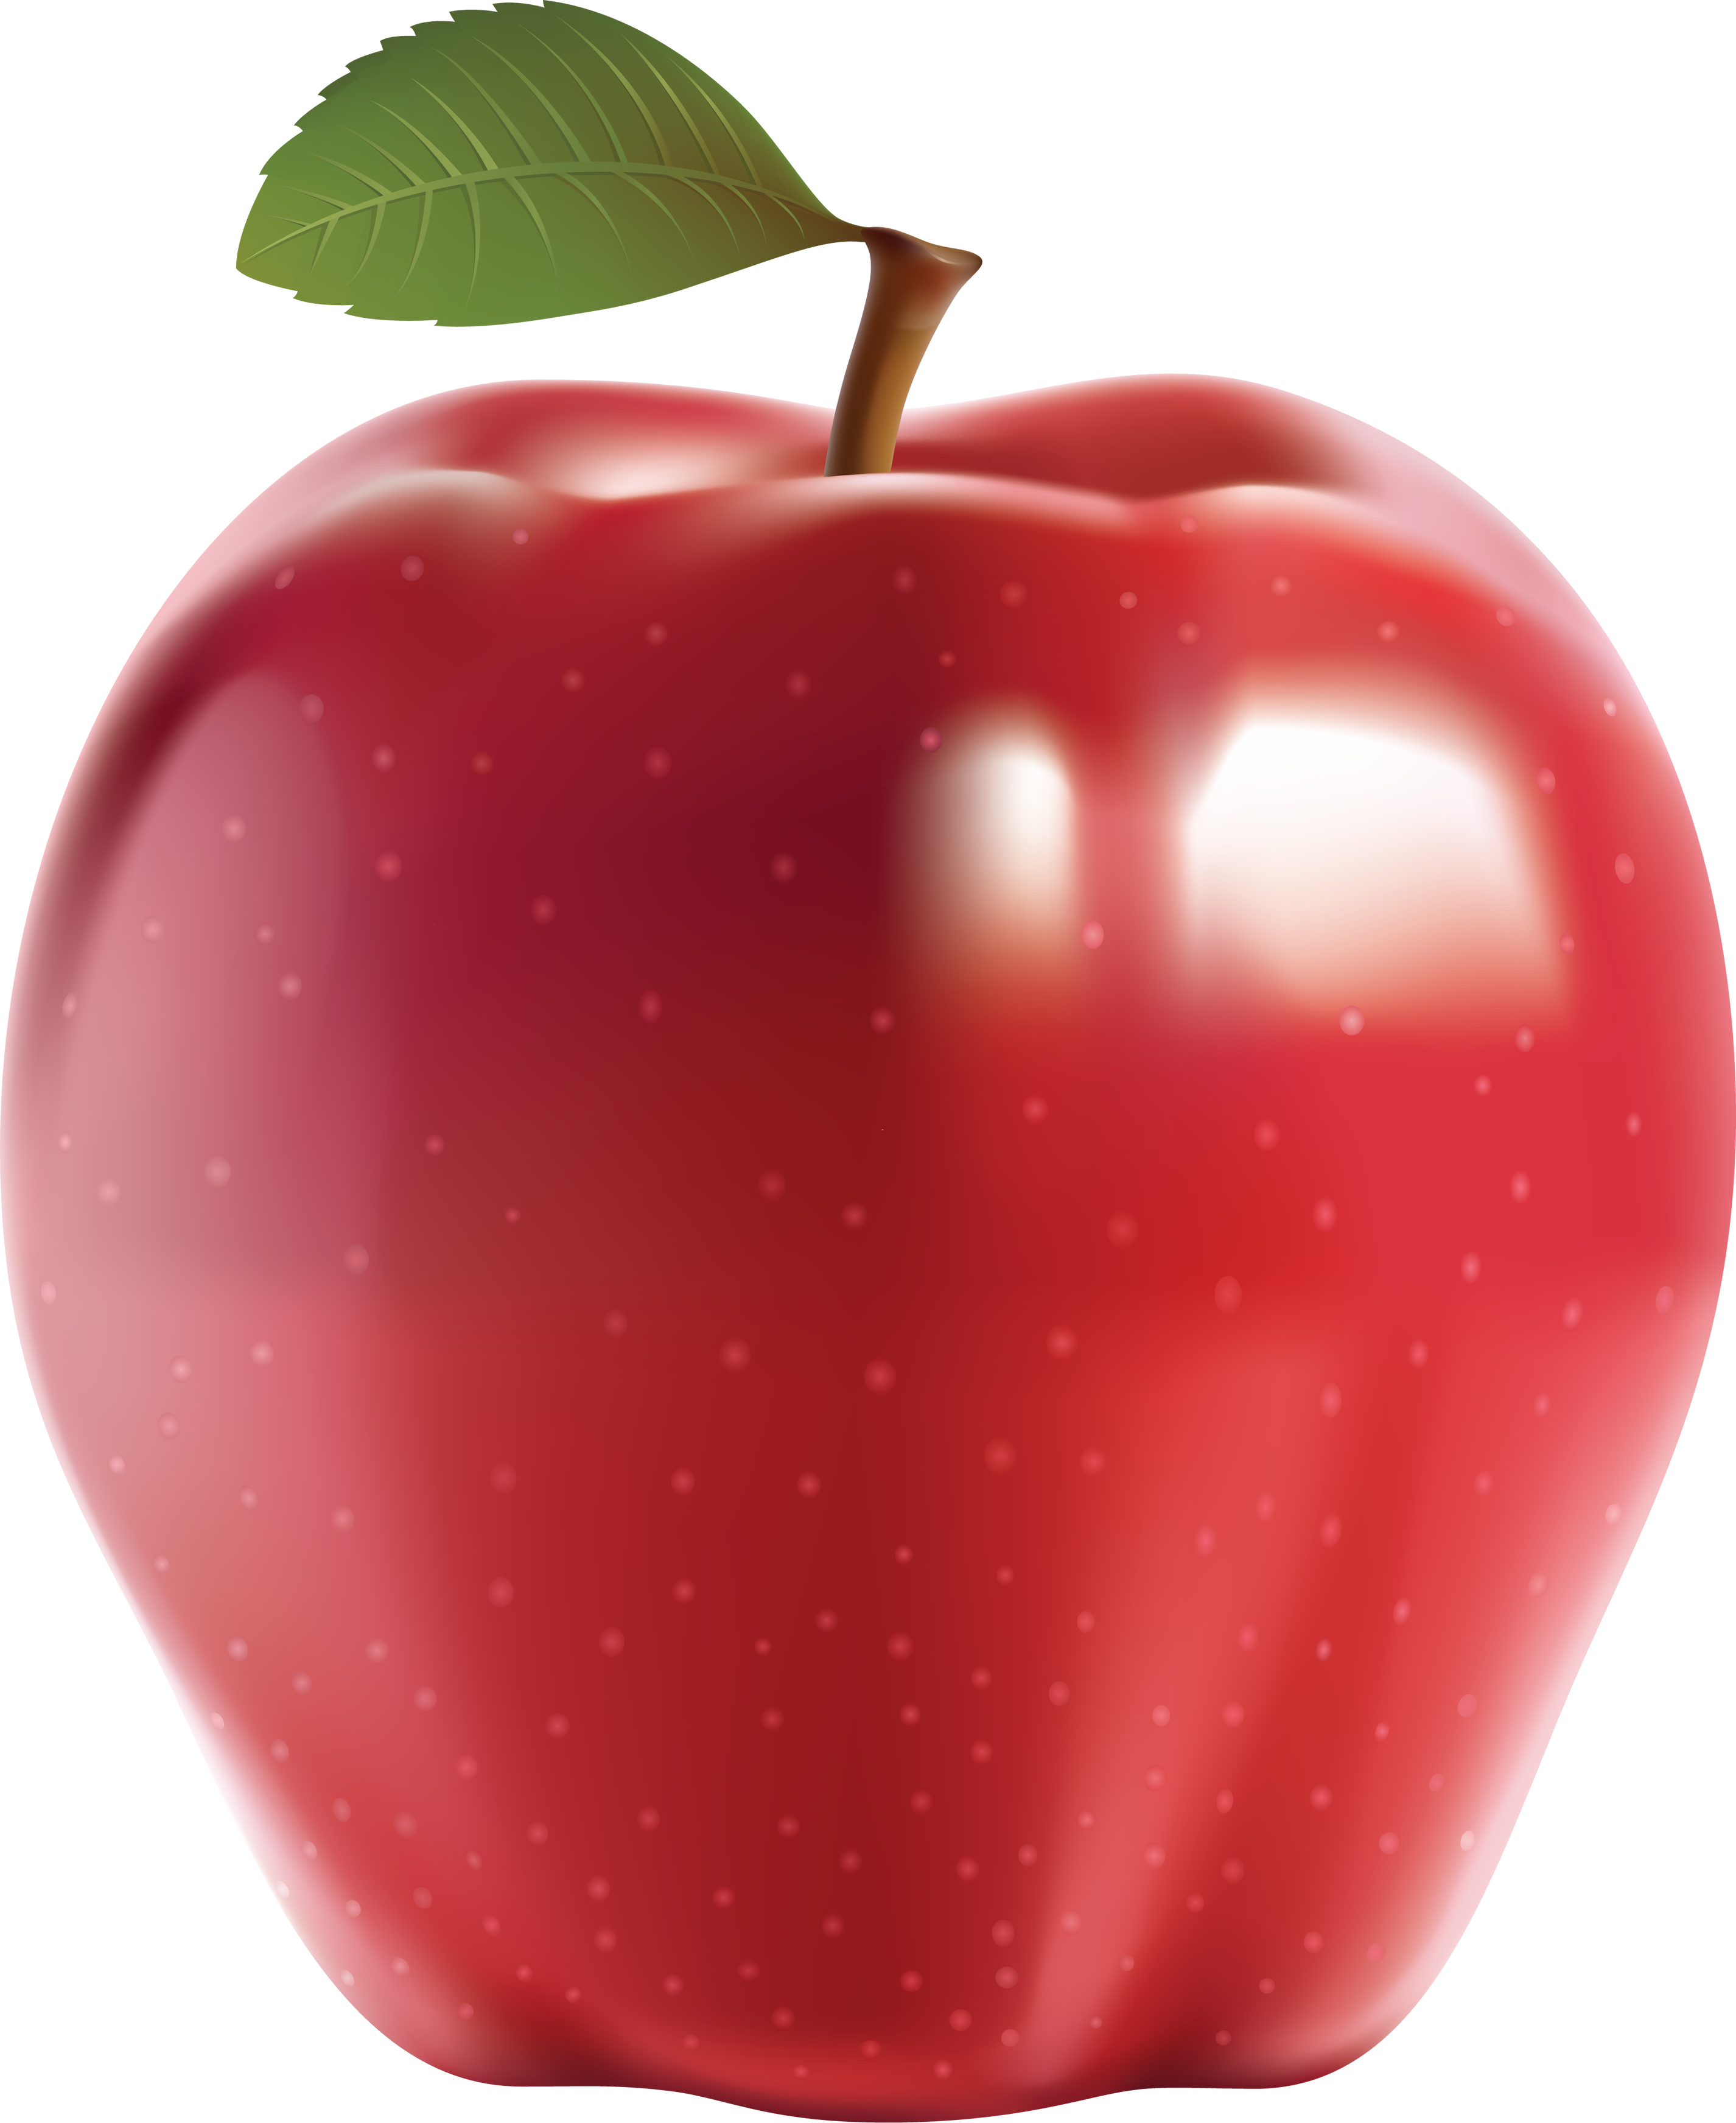 Red Apple Fruit PNG Image Background